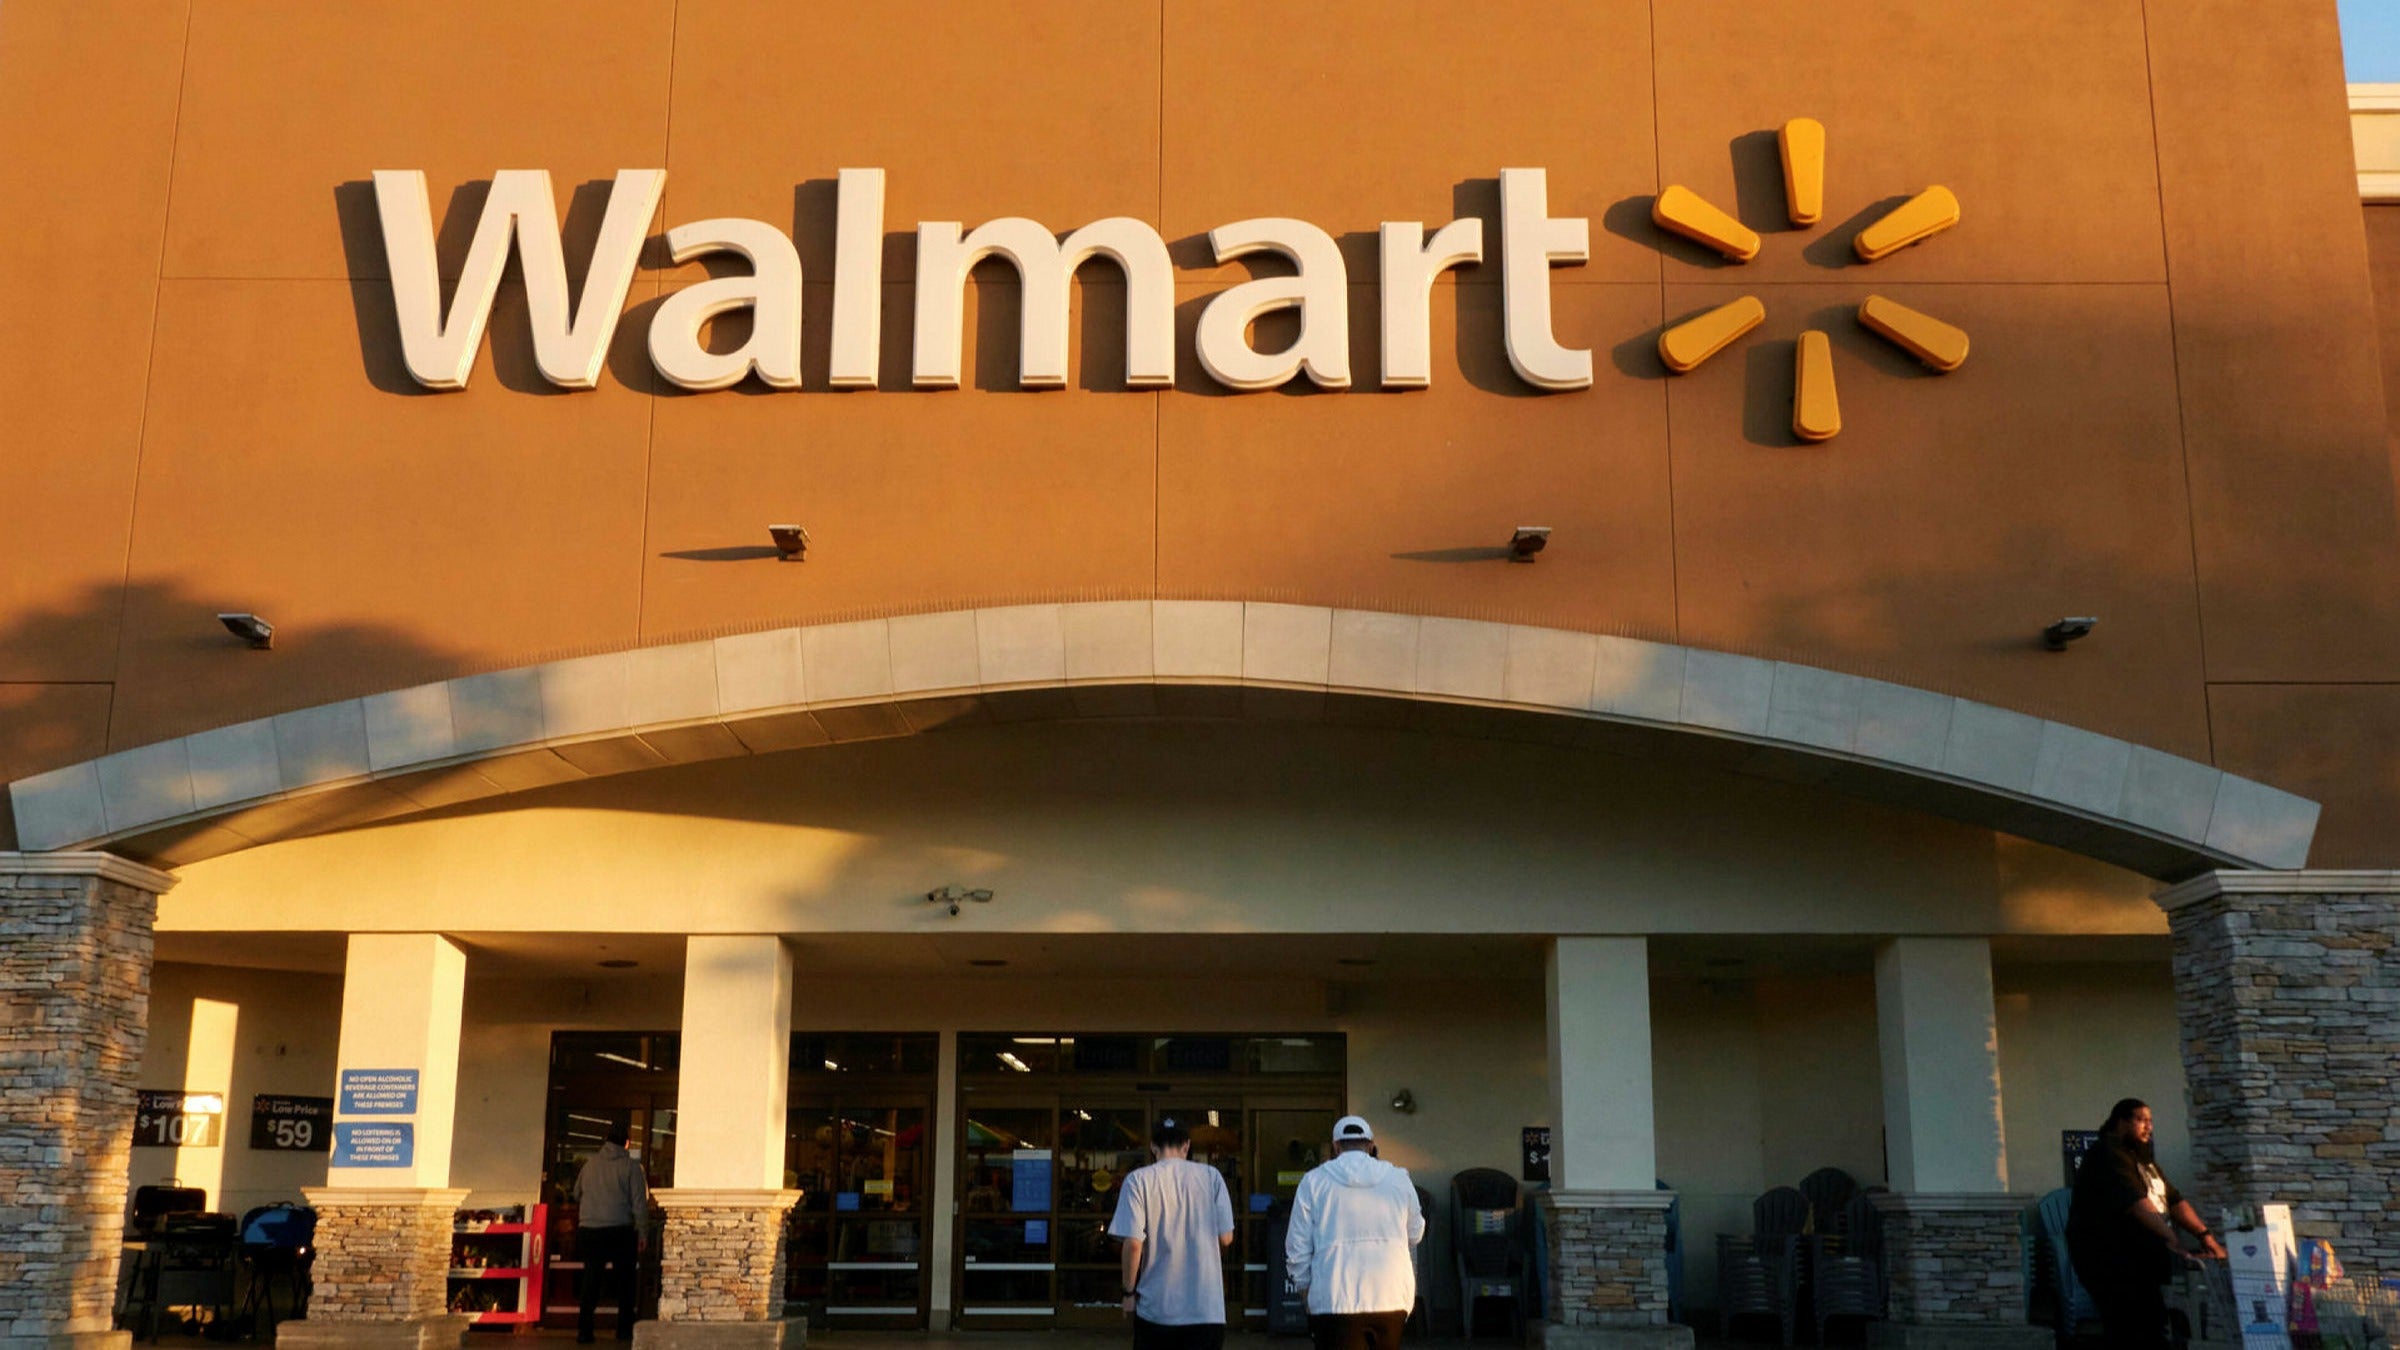 De Ce S-au Prabusit Actiunile Walmart Saptamana Trecuta?